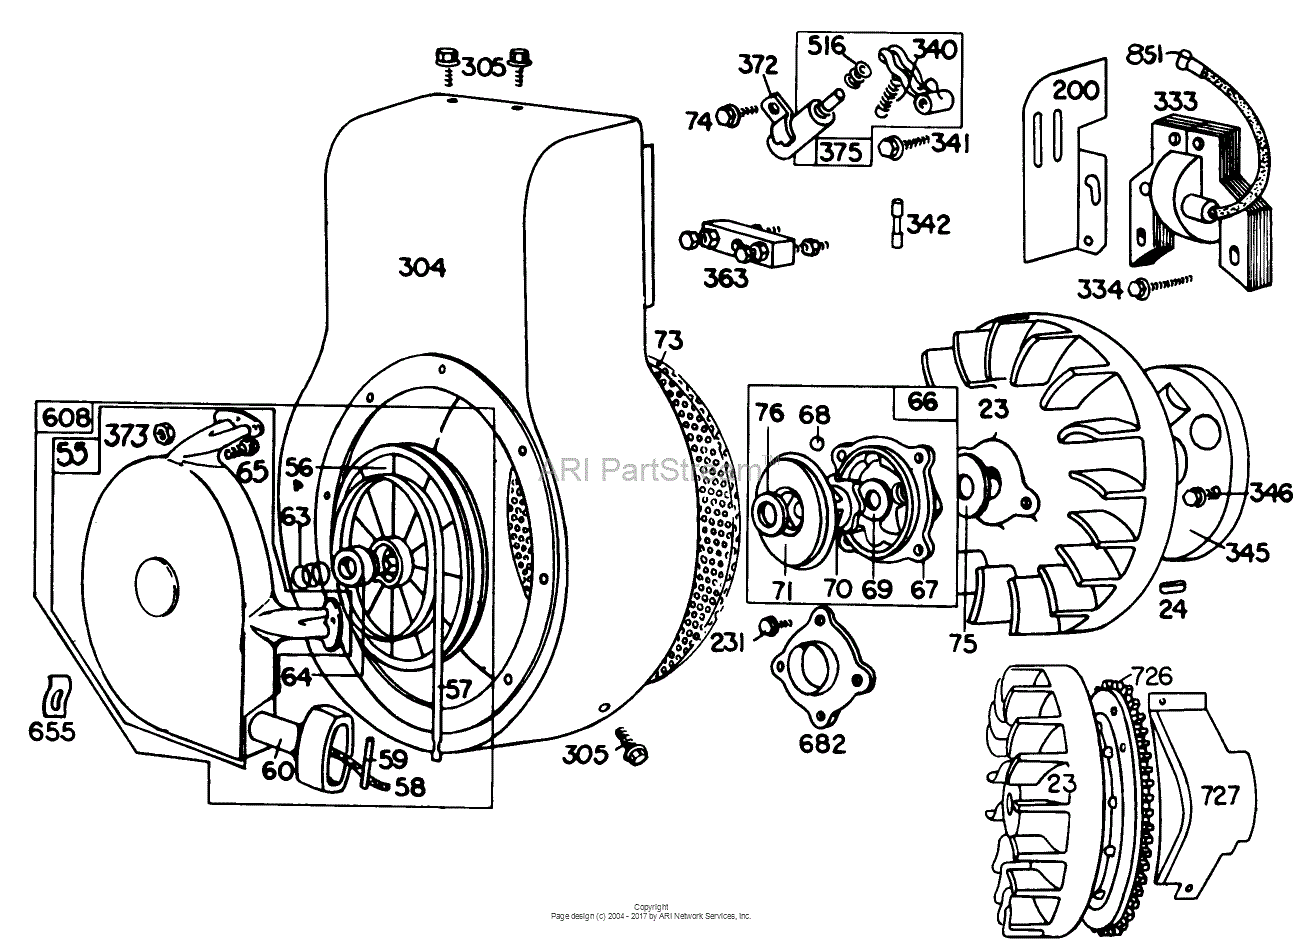 8 hp briggs and stratton carburetor diagram